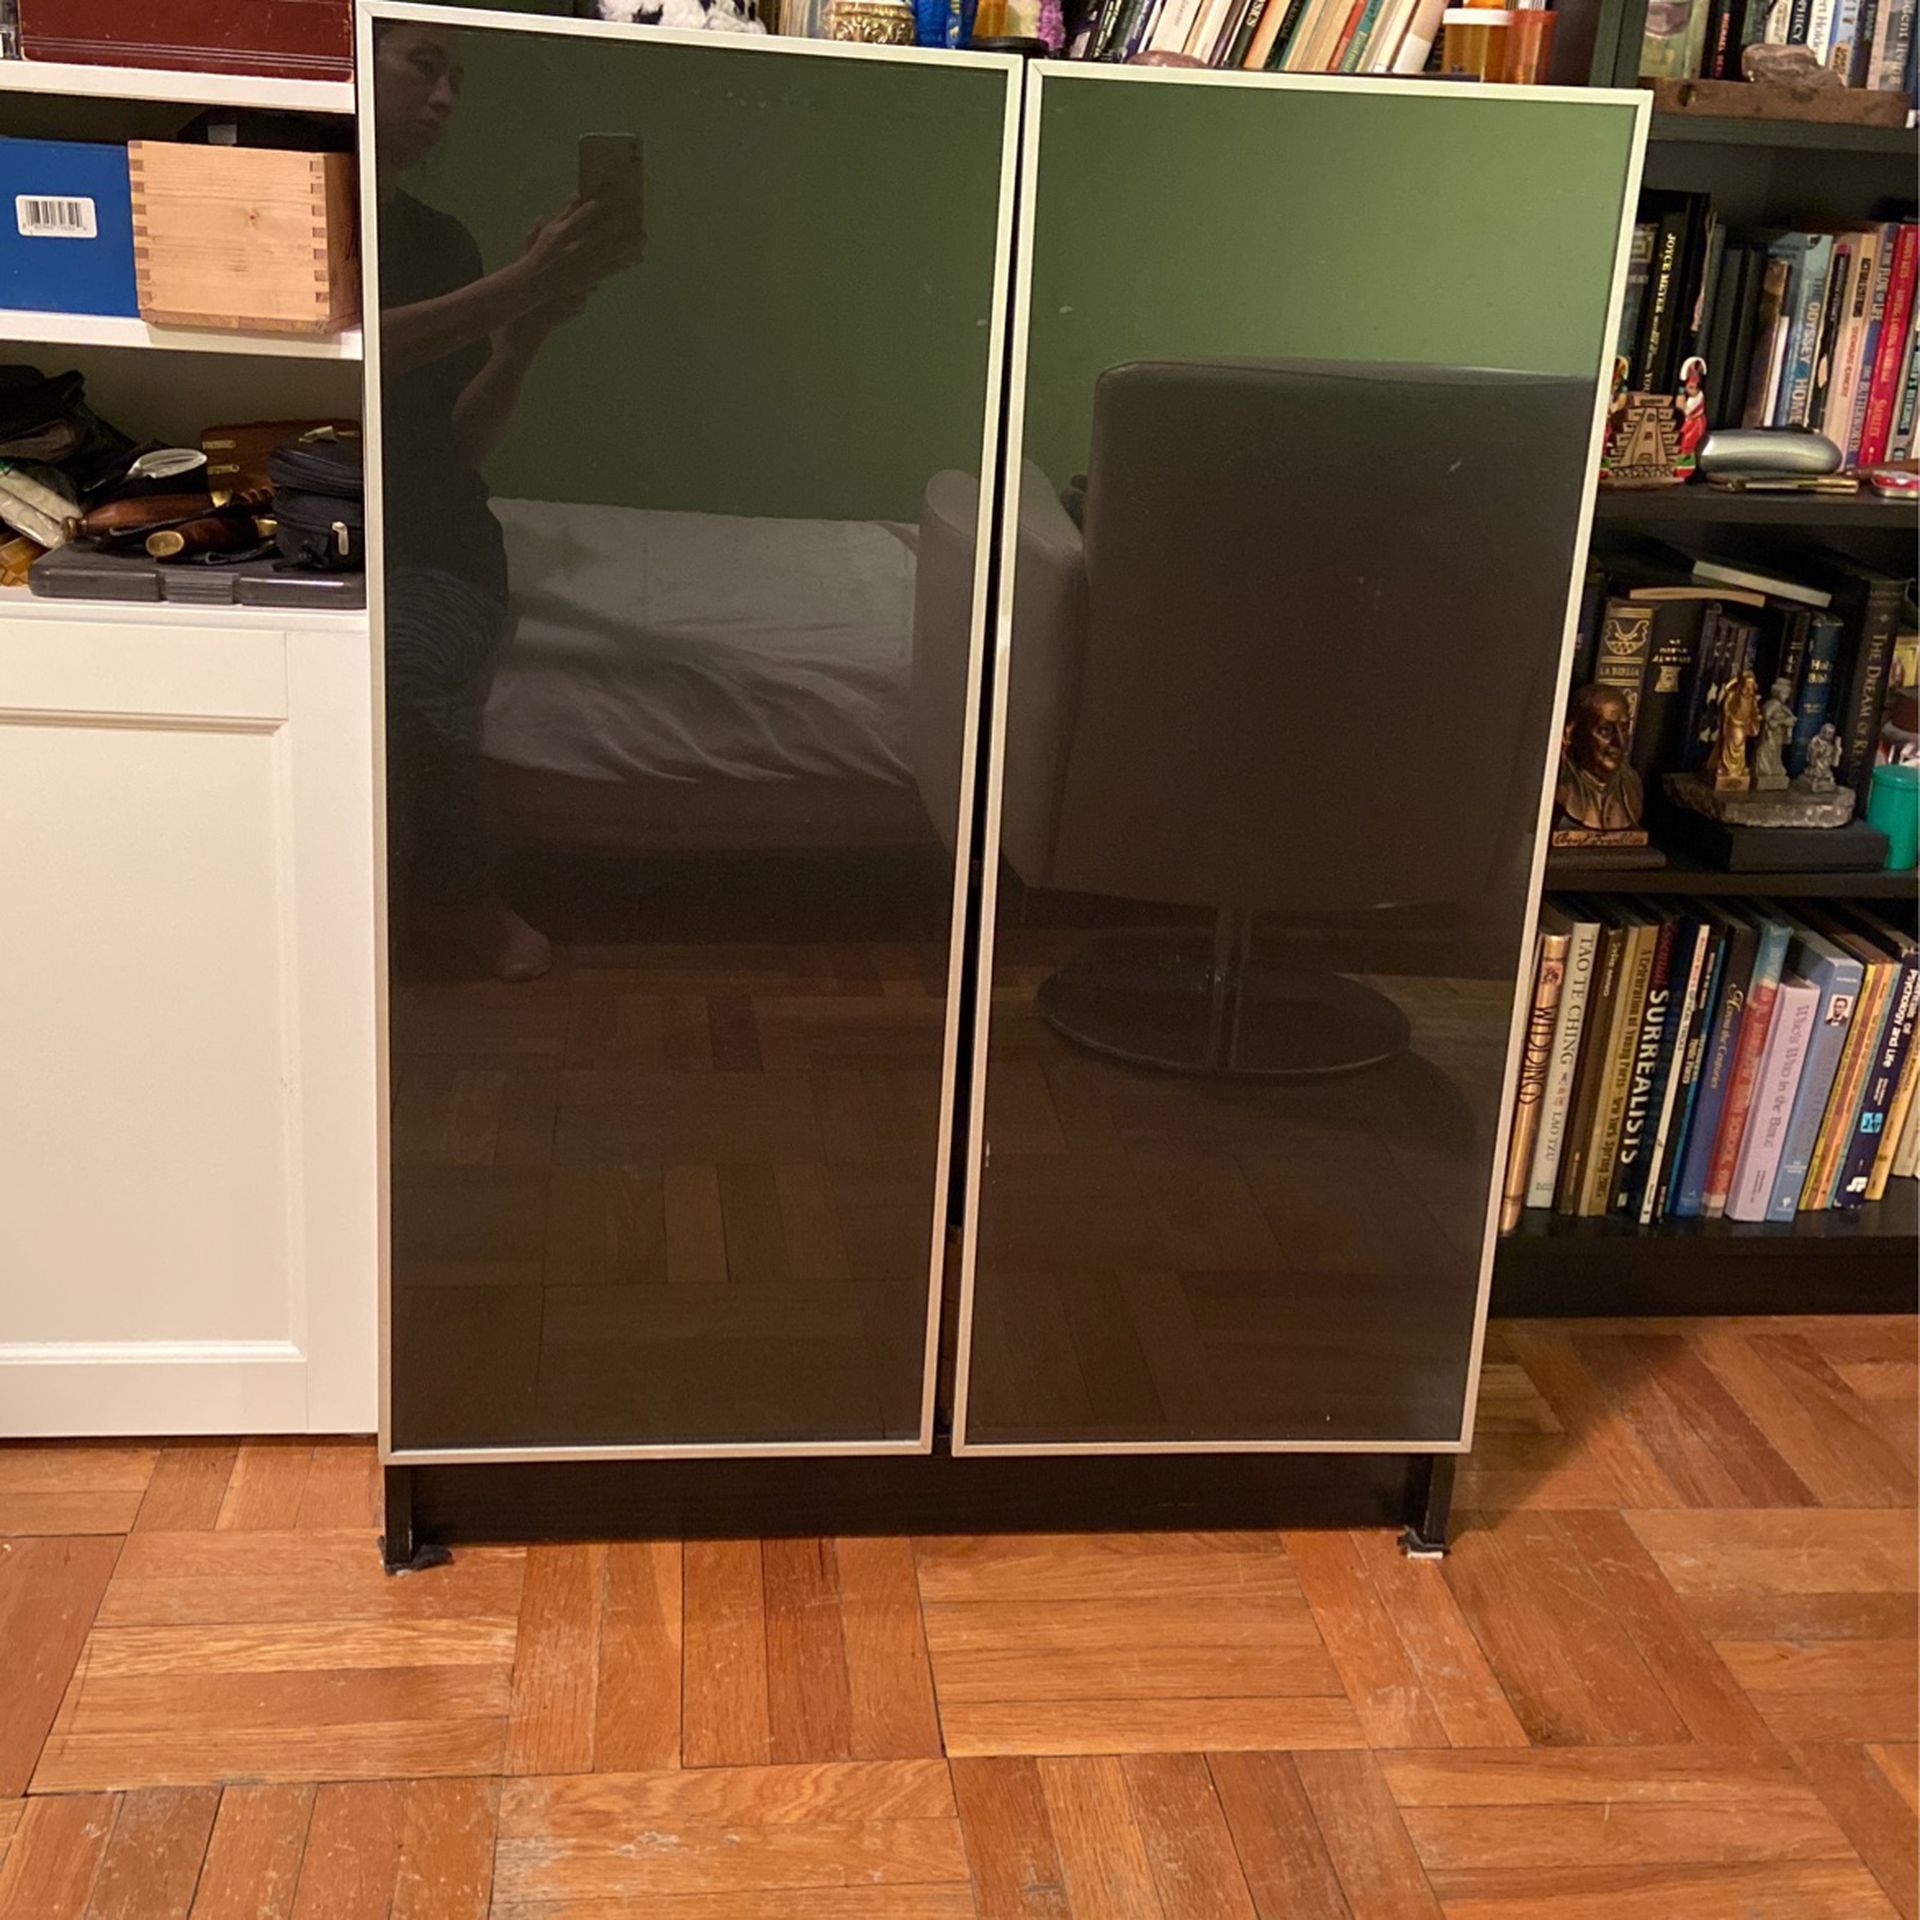 2 Ikea Bookshelves With Glass Doors $60 Each